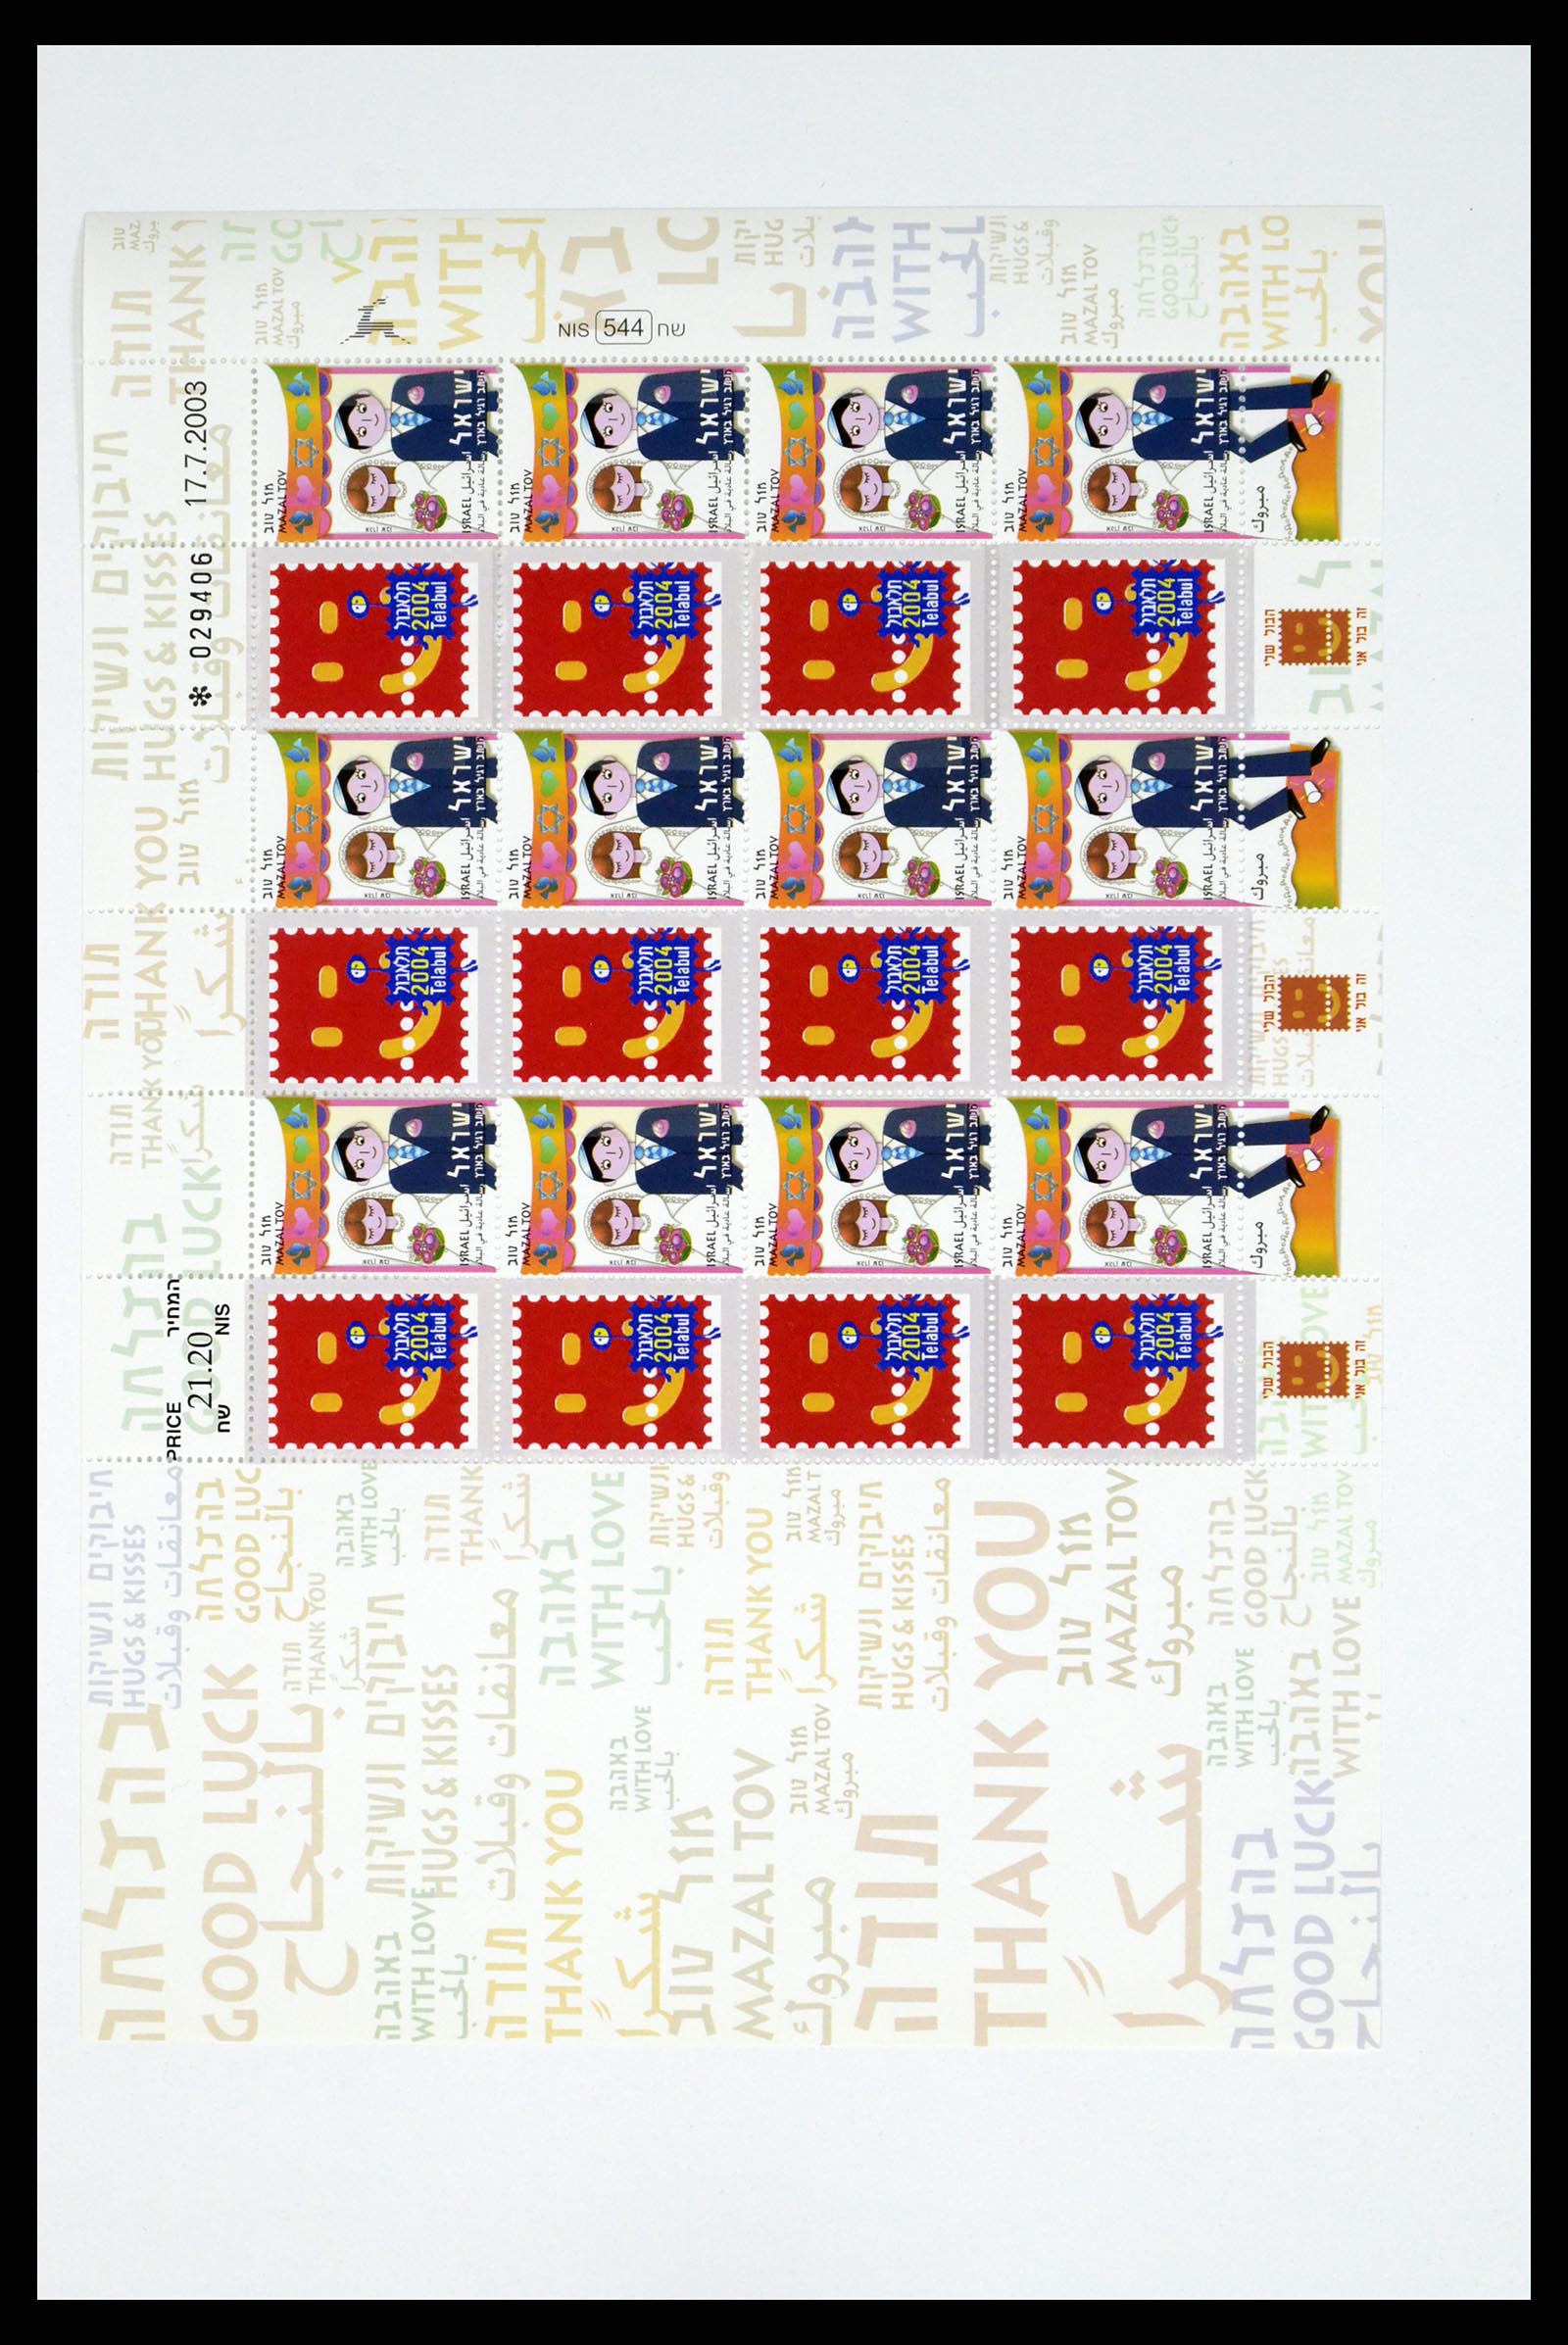 37779 328 - Stamp collection 37779 Israel sheetlets 1986-2009.